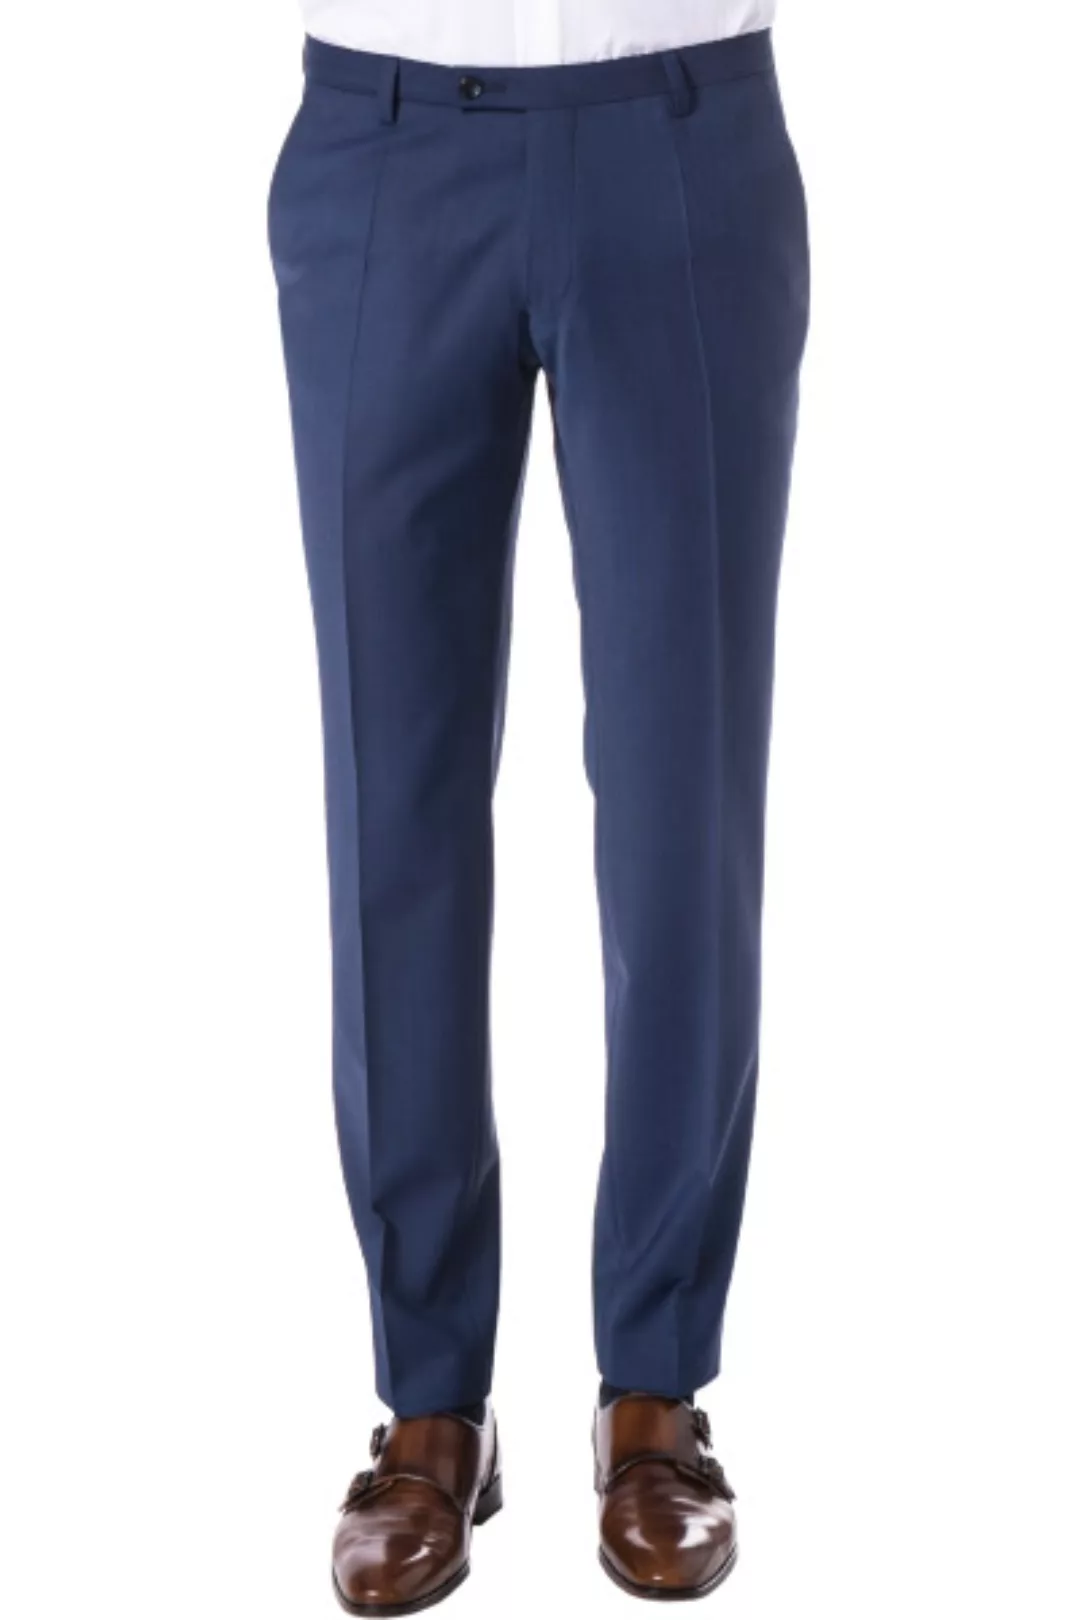 Carl Gross Anzughose - Anzughose - modern Fit - Hose - Trousers - CG Cedric günstig online kaufen